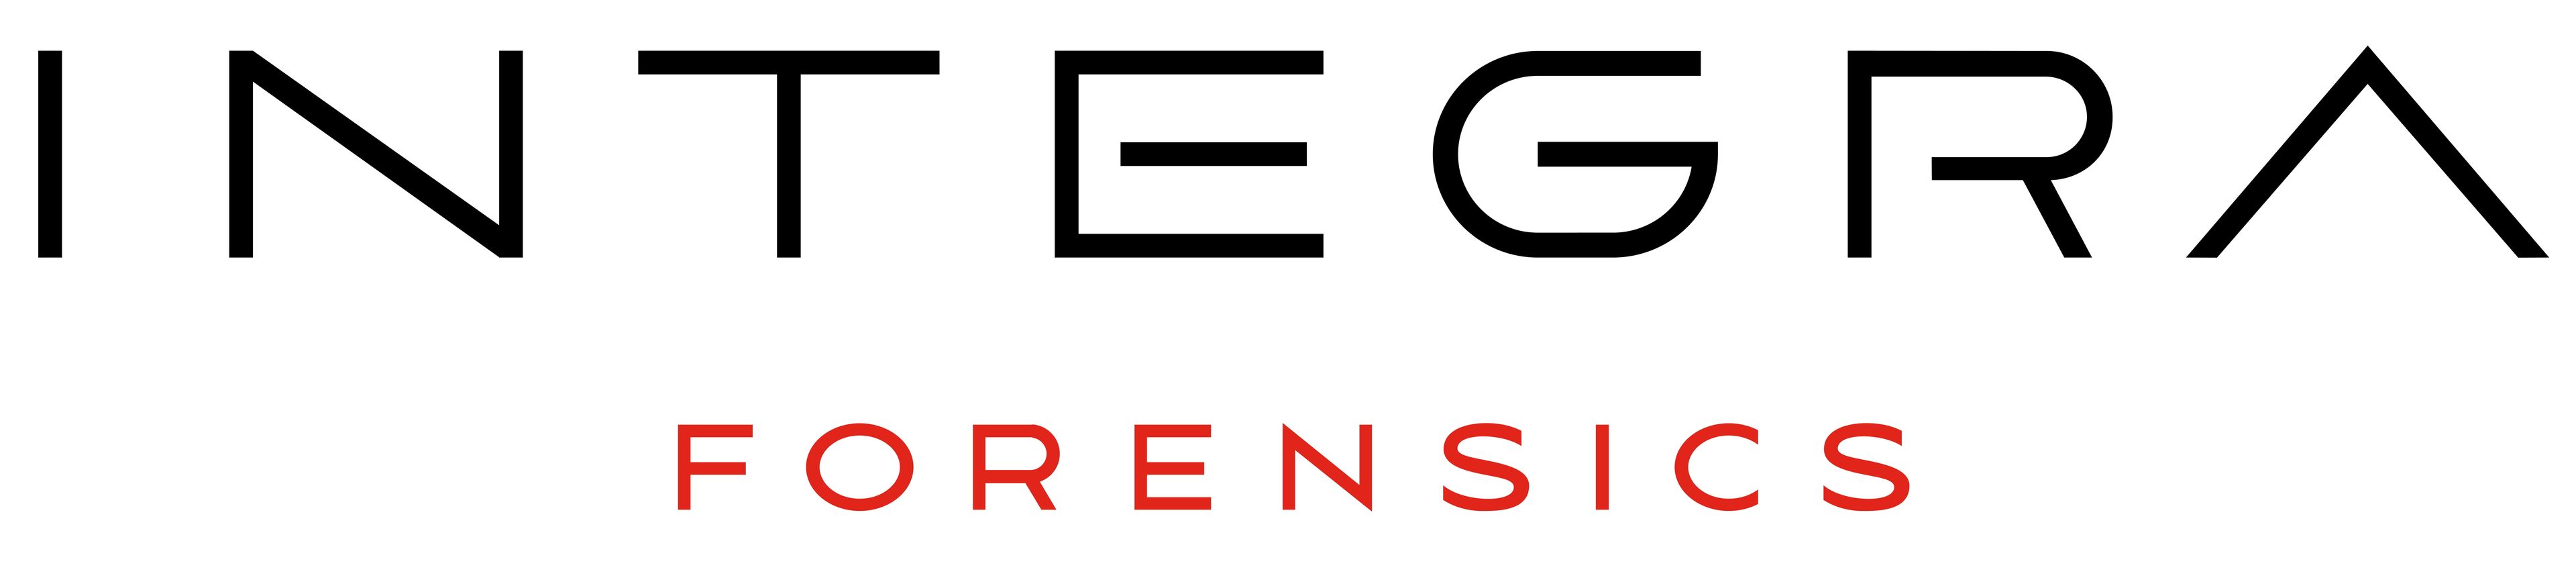 Integra forensics logo